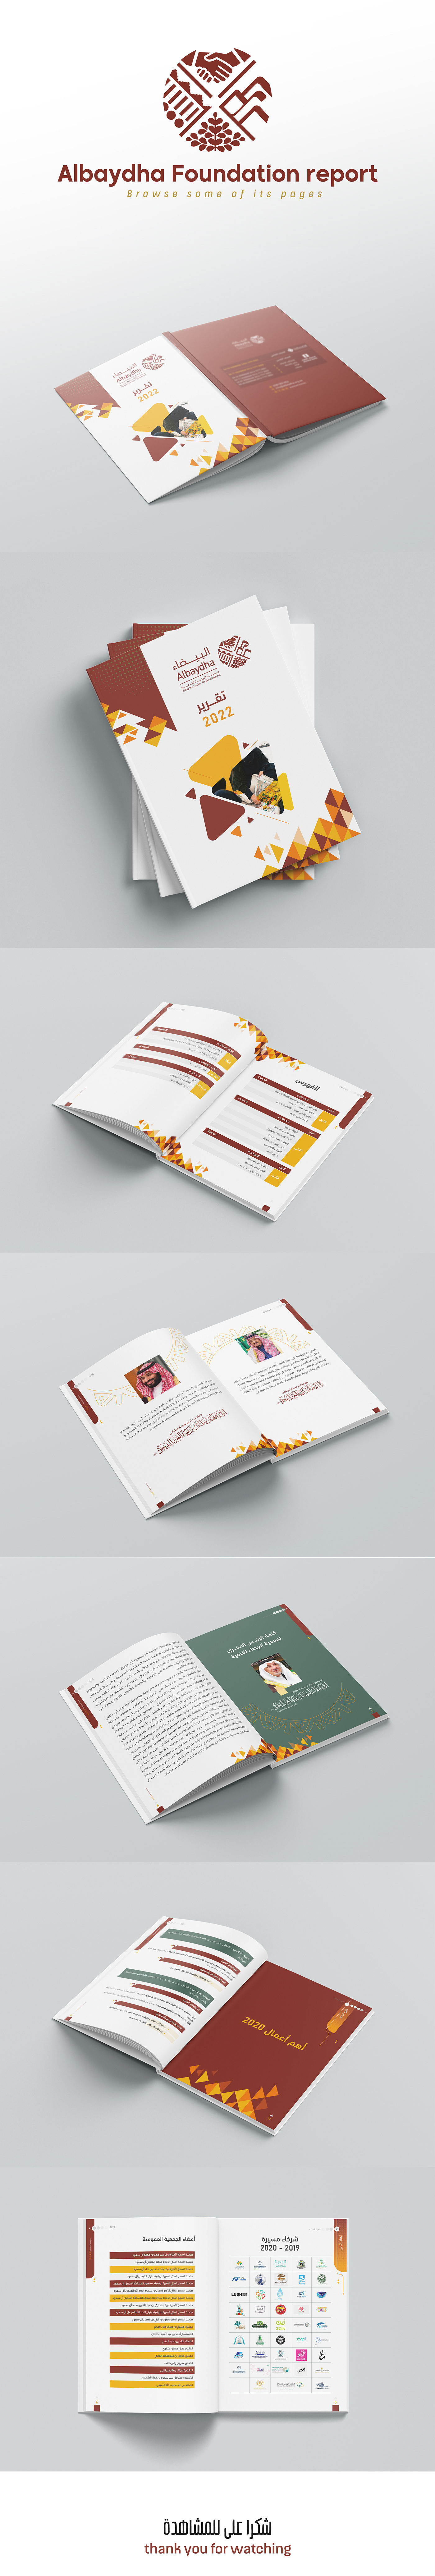 books book cover magazine brochure book design InDesign